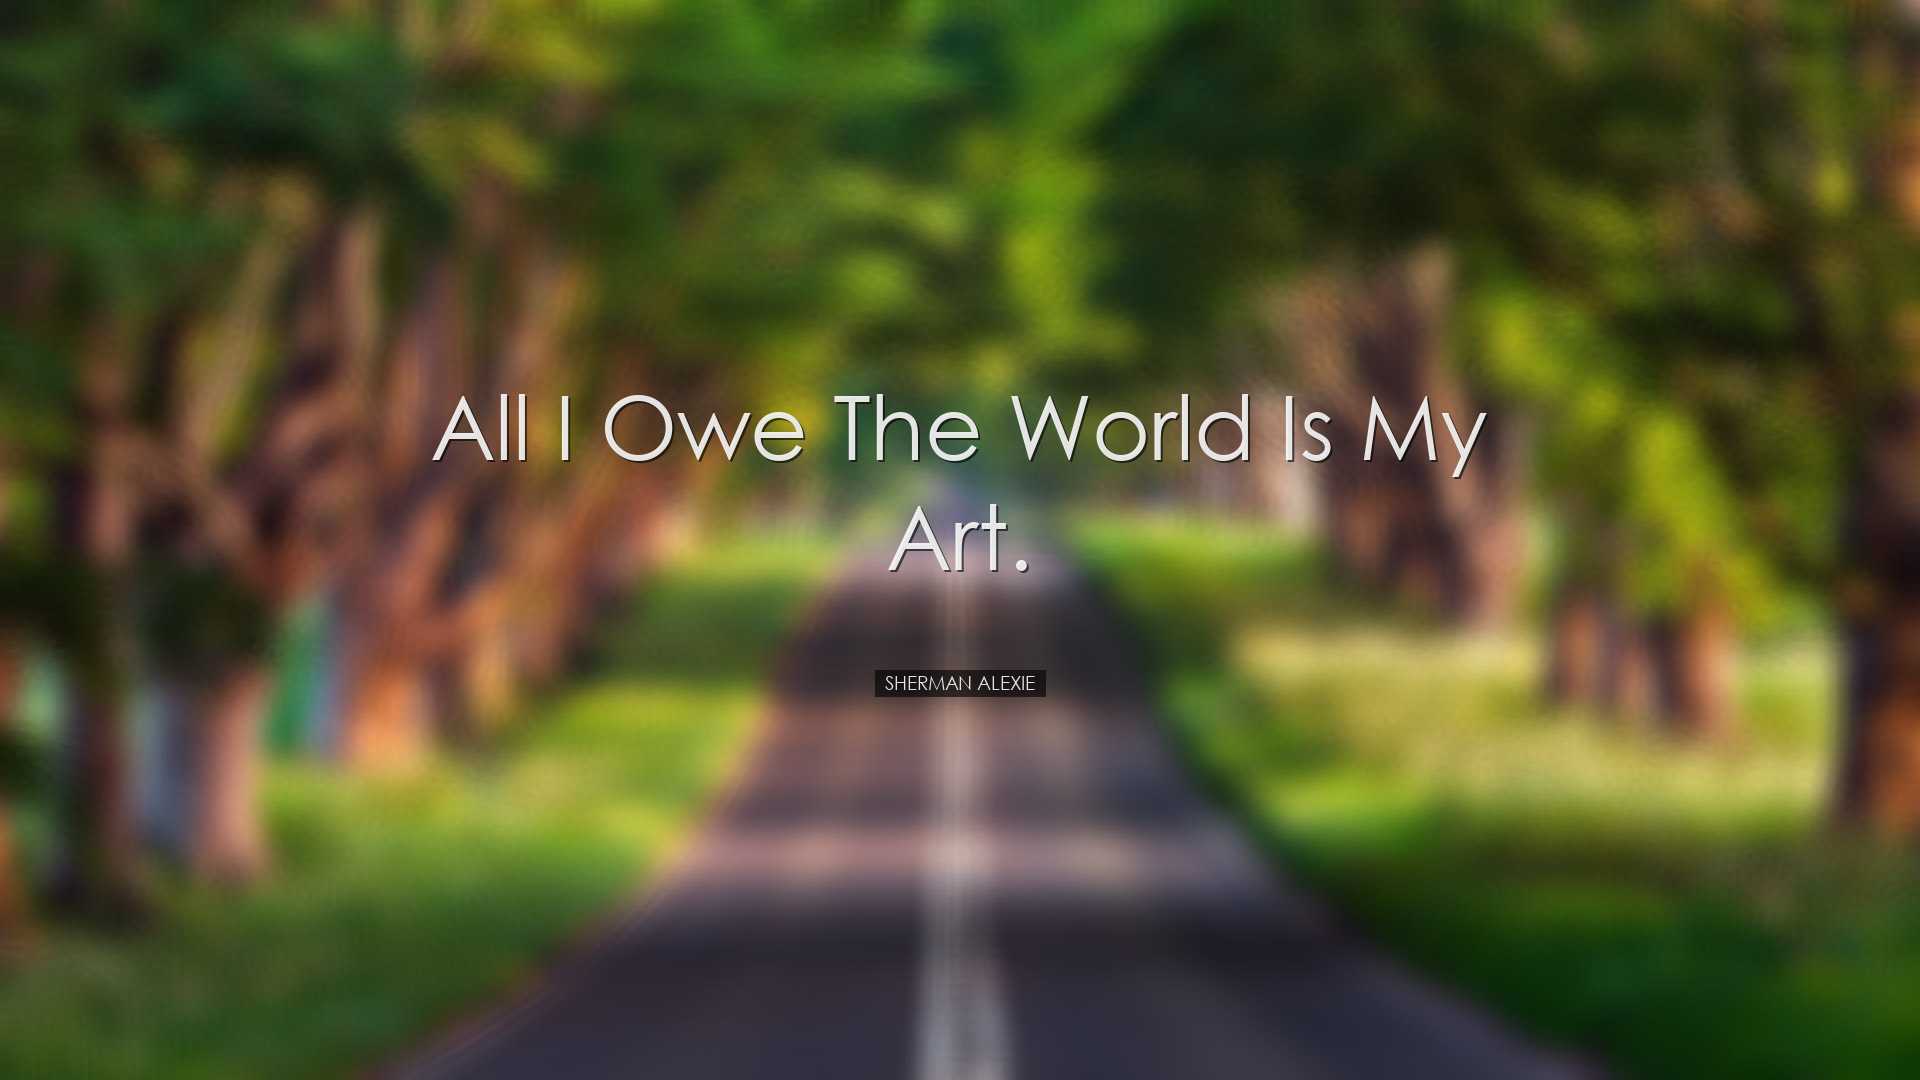 All I owe the world is my art. - Sherman Alexie